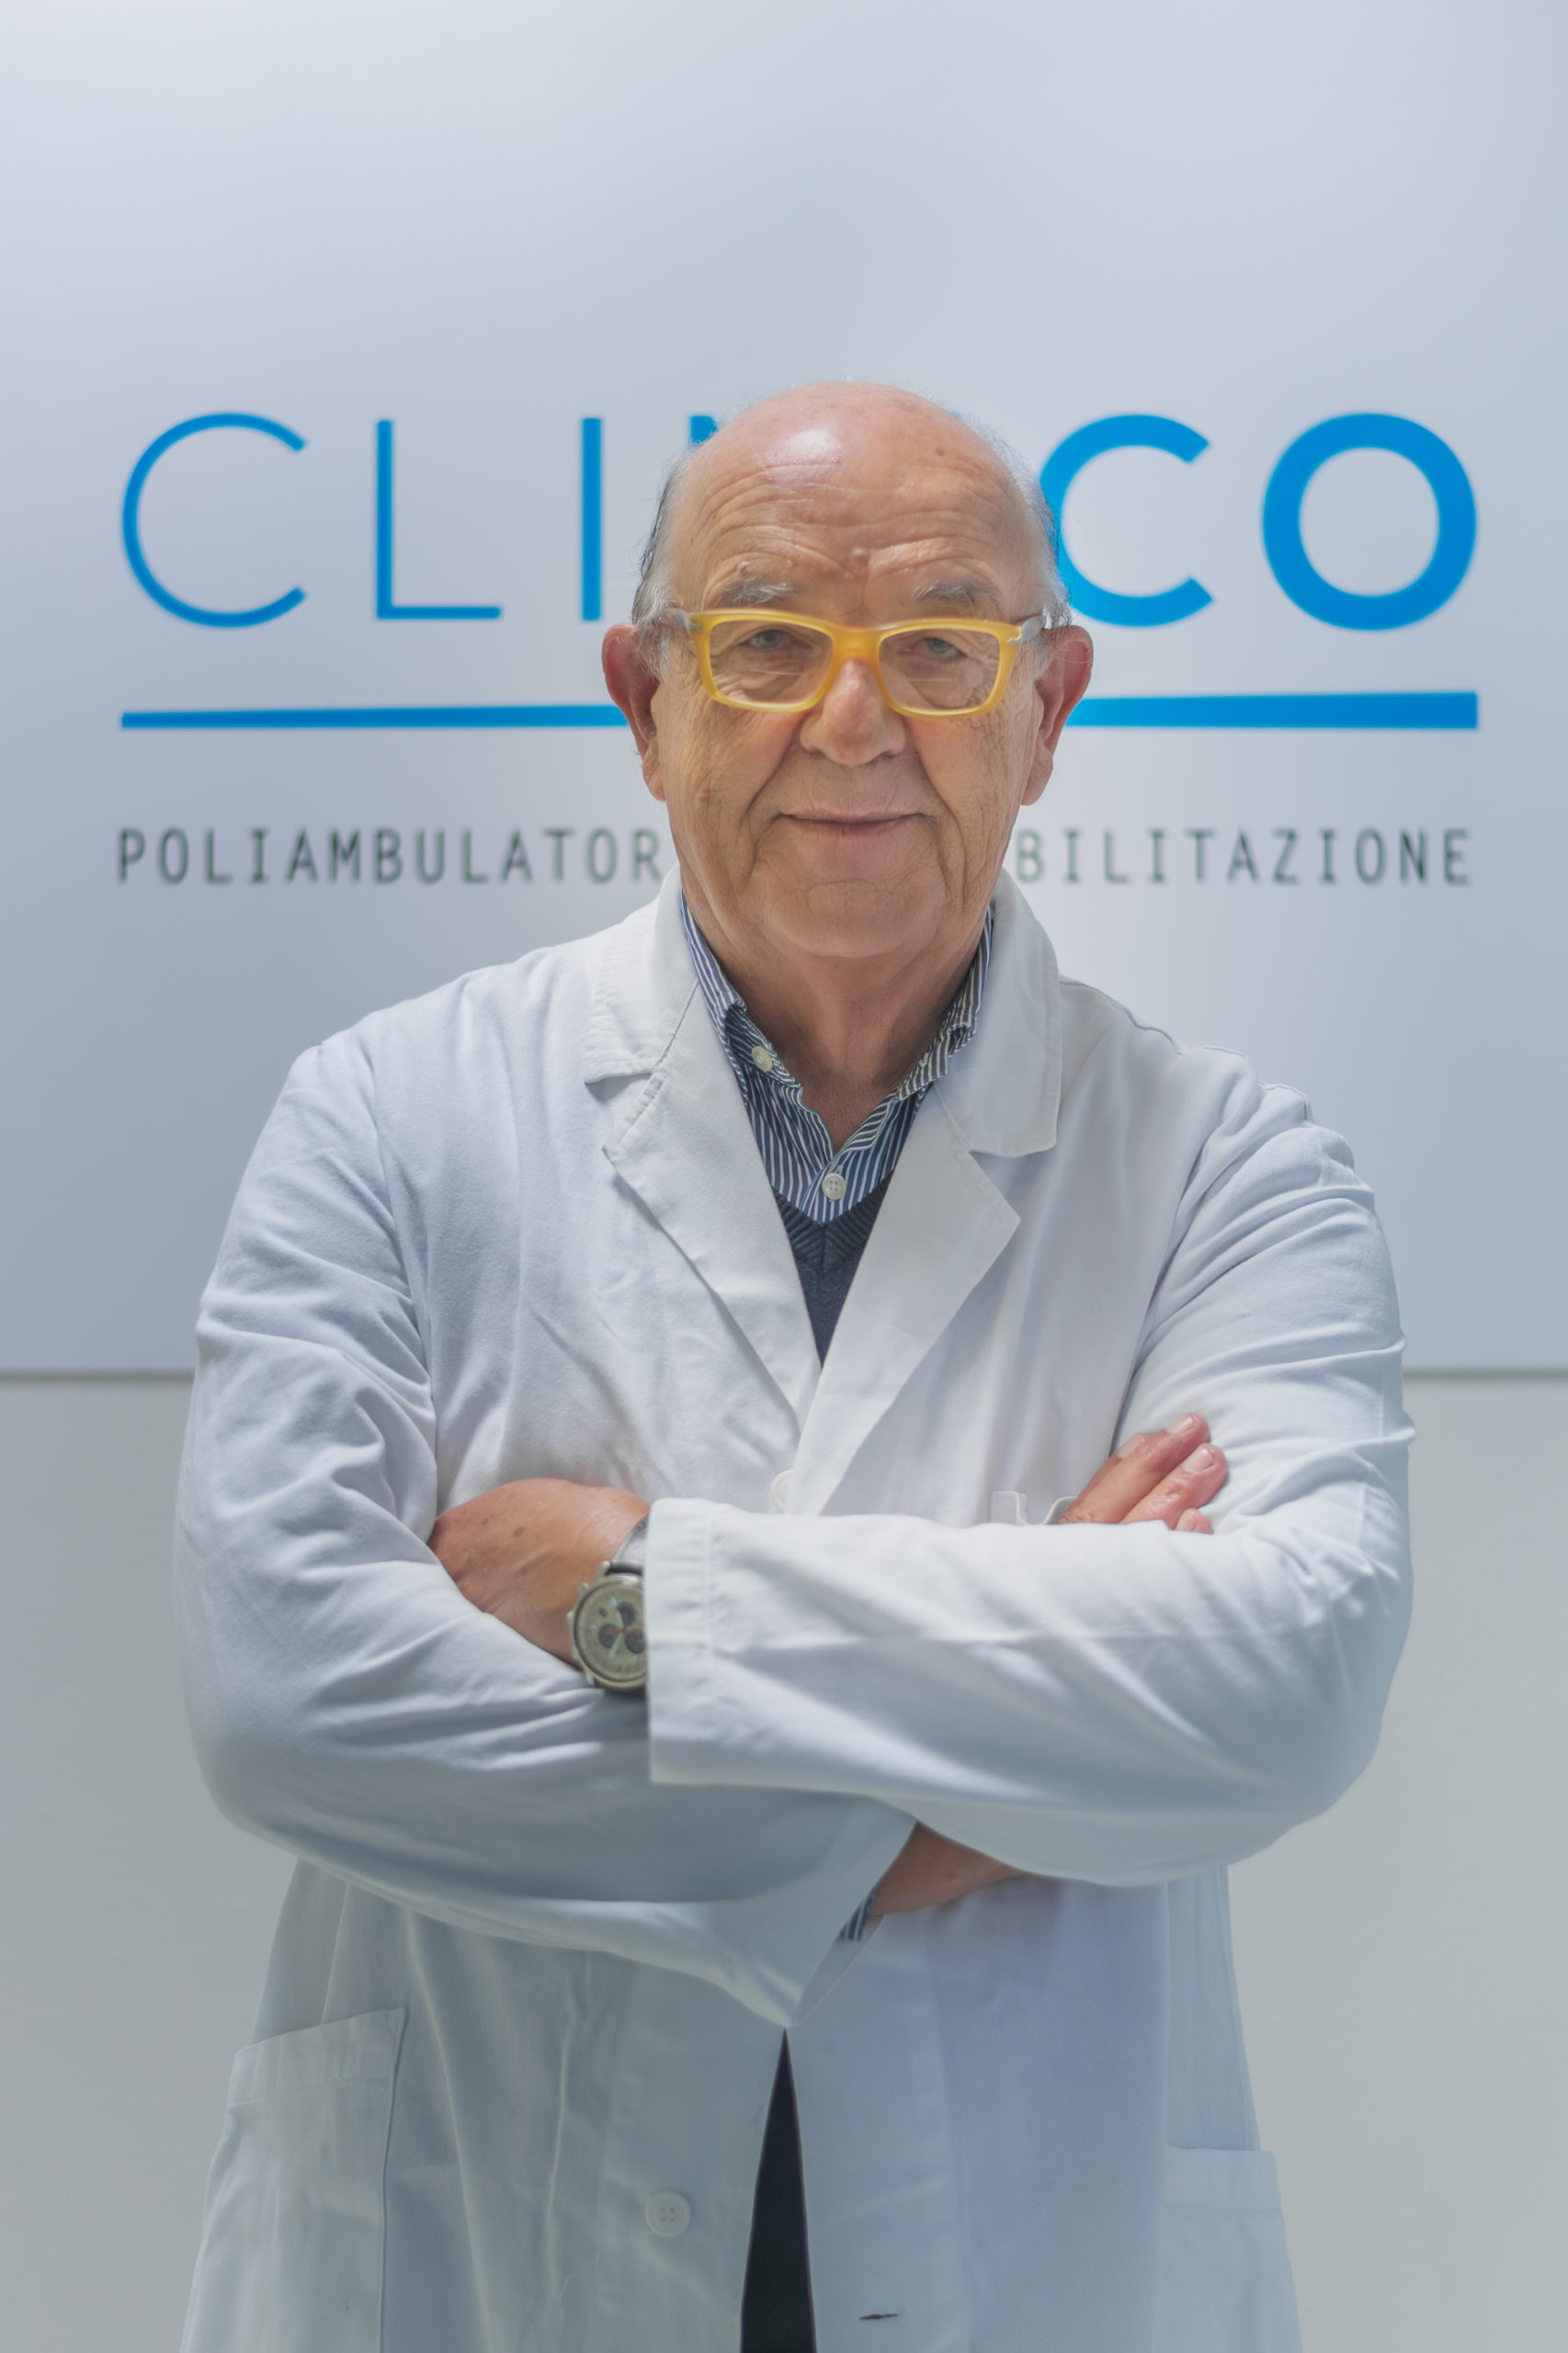 Dr. Paini Giampaolo